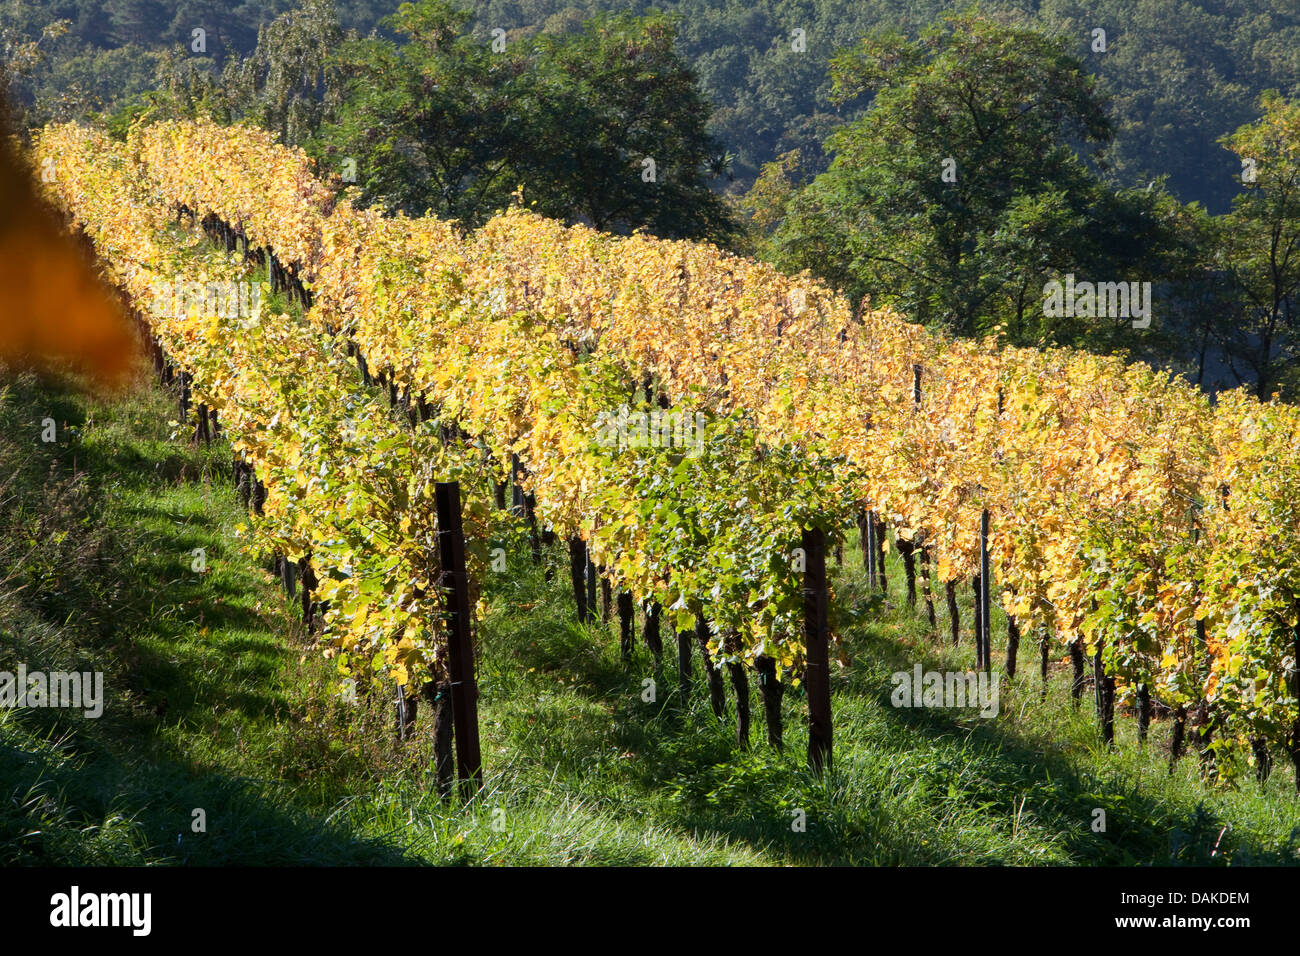 grape-vine, vine (Vitis vinifera), vineyard in autumn, Germany, Rhineland-Palatinate, Palatinate Stock Photo